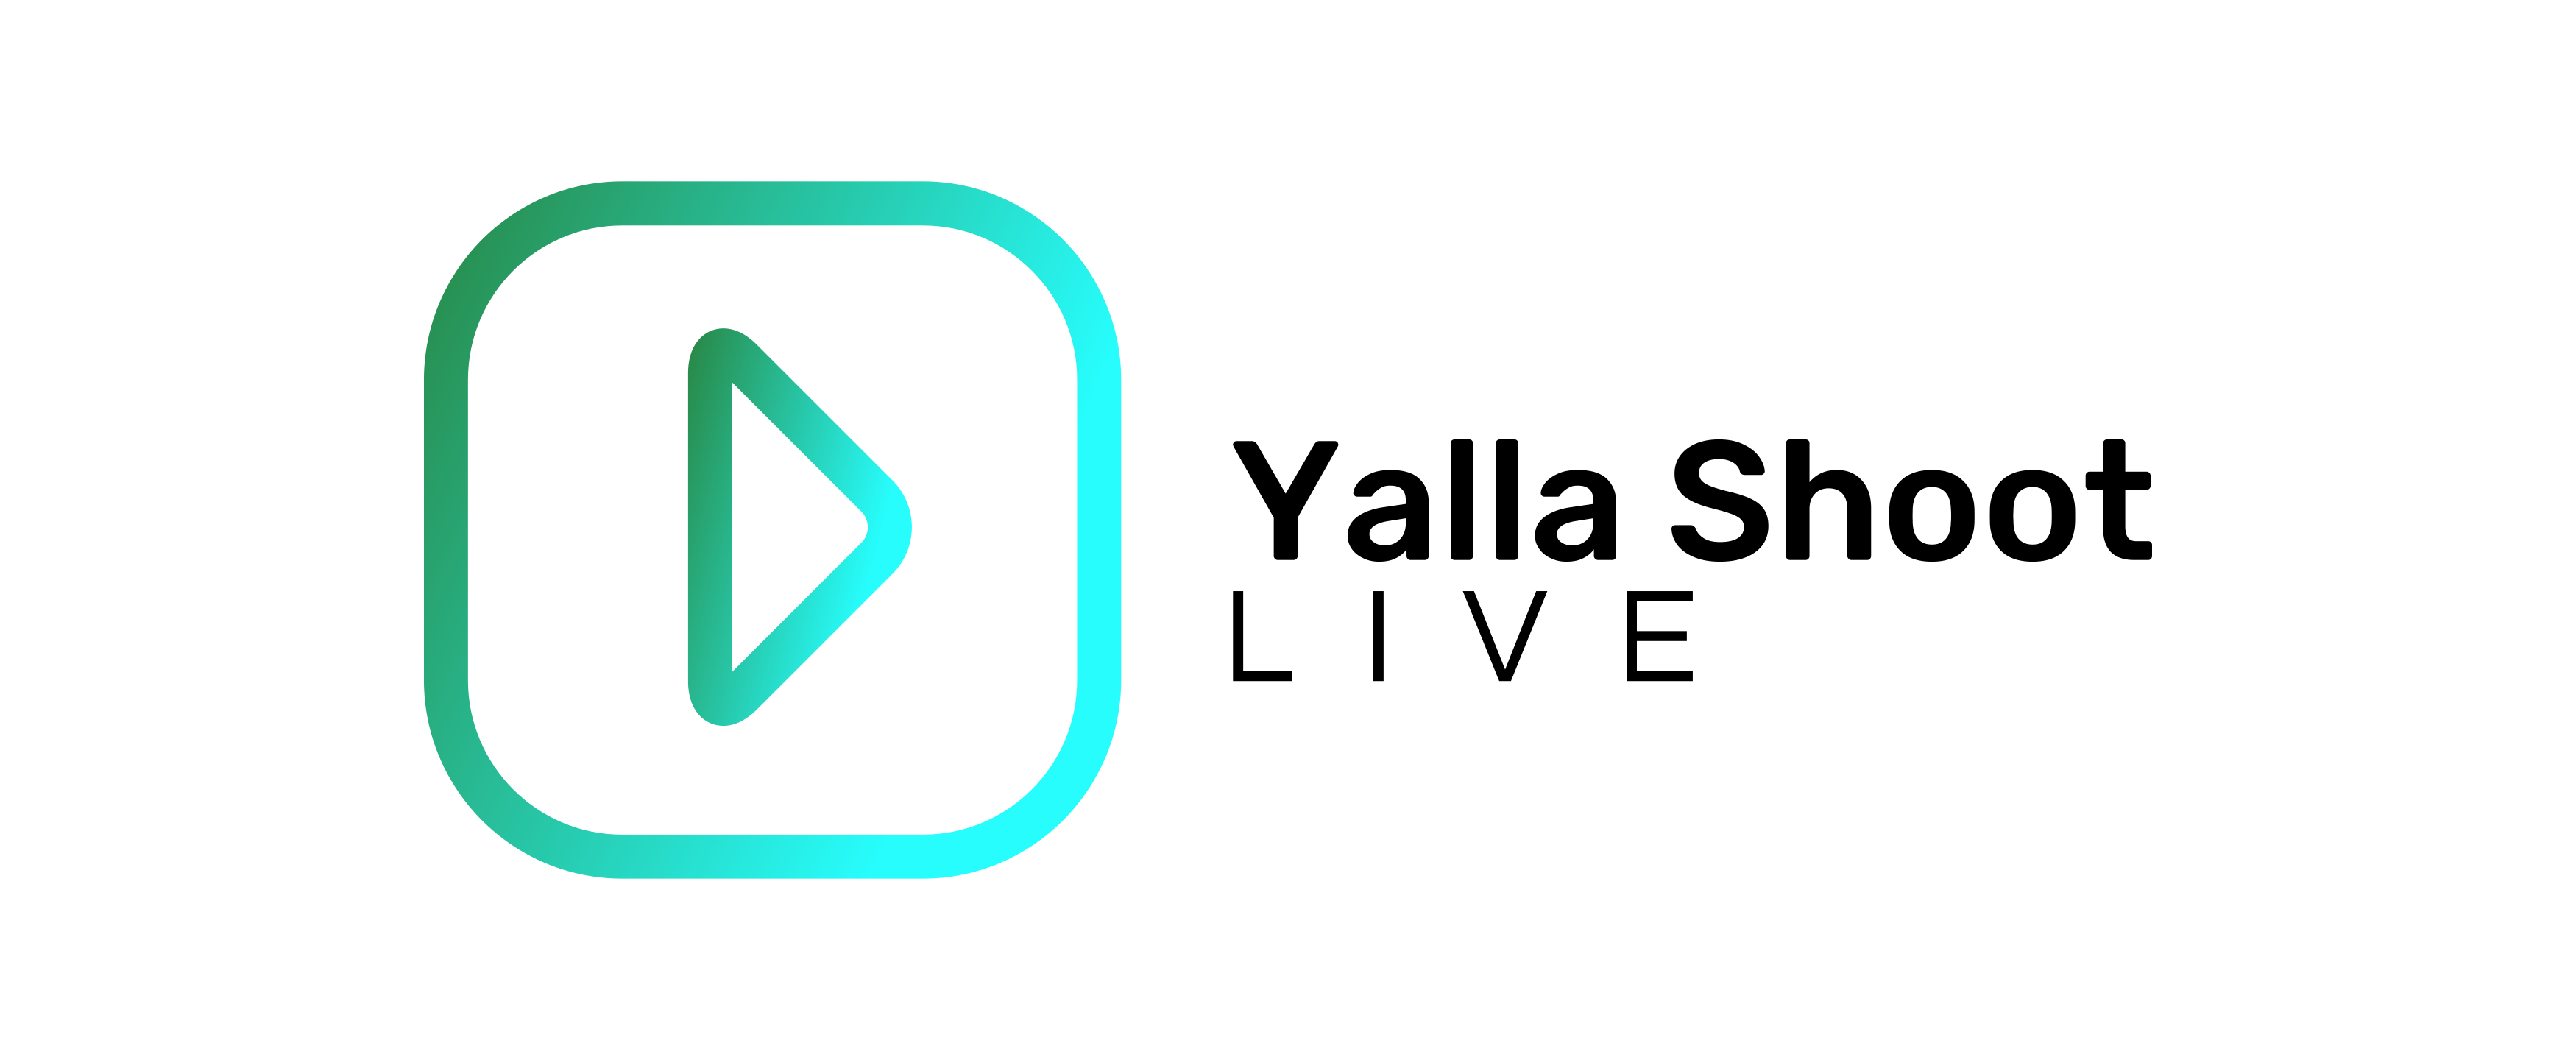 Espanyol Table | Yalla Shoot Live